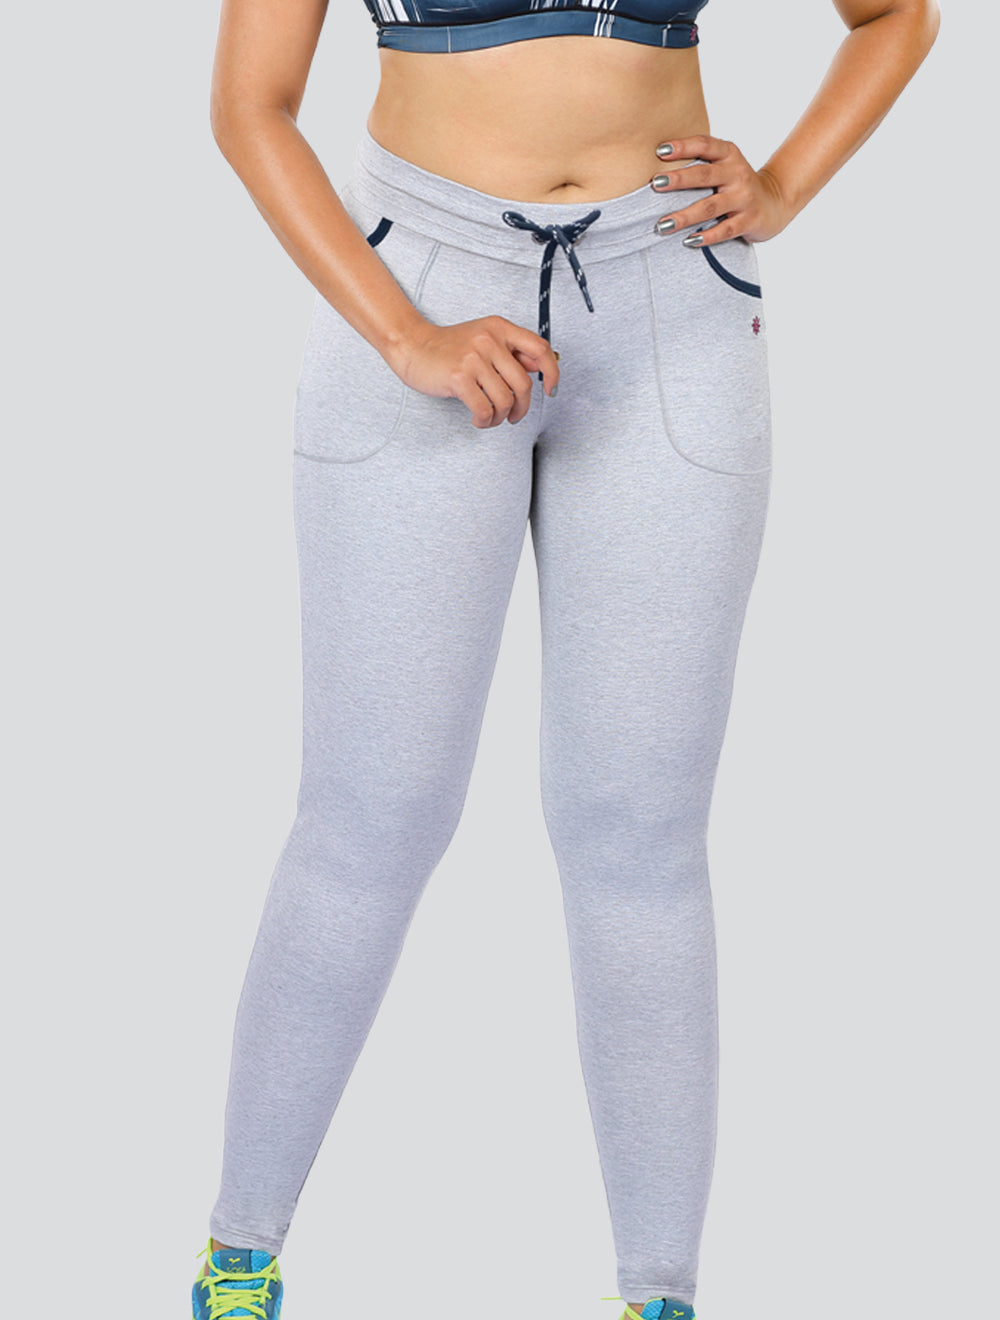 Women's Compression Cargo Pockets Leggings High Waist Workout Running Yoga  pants | eBay